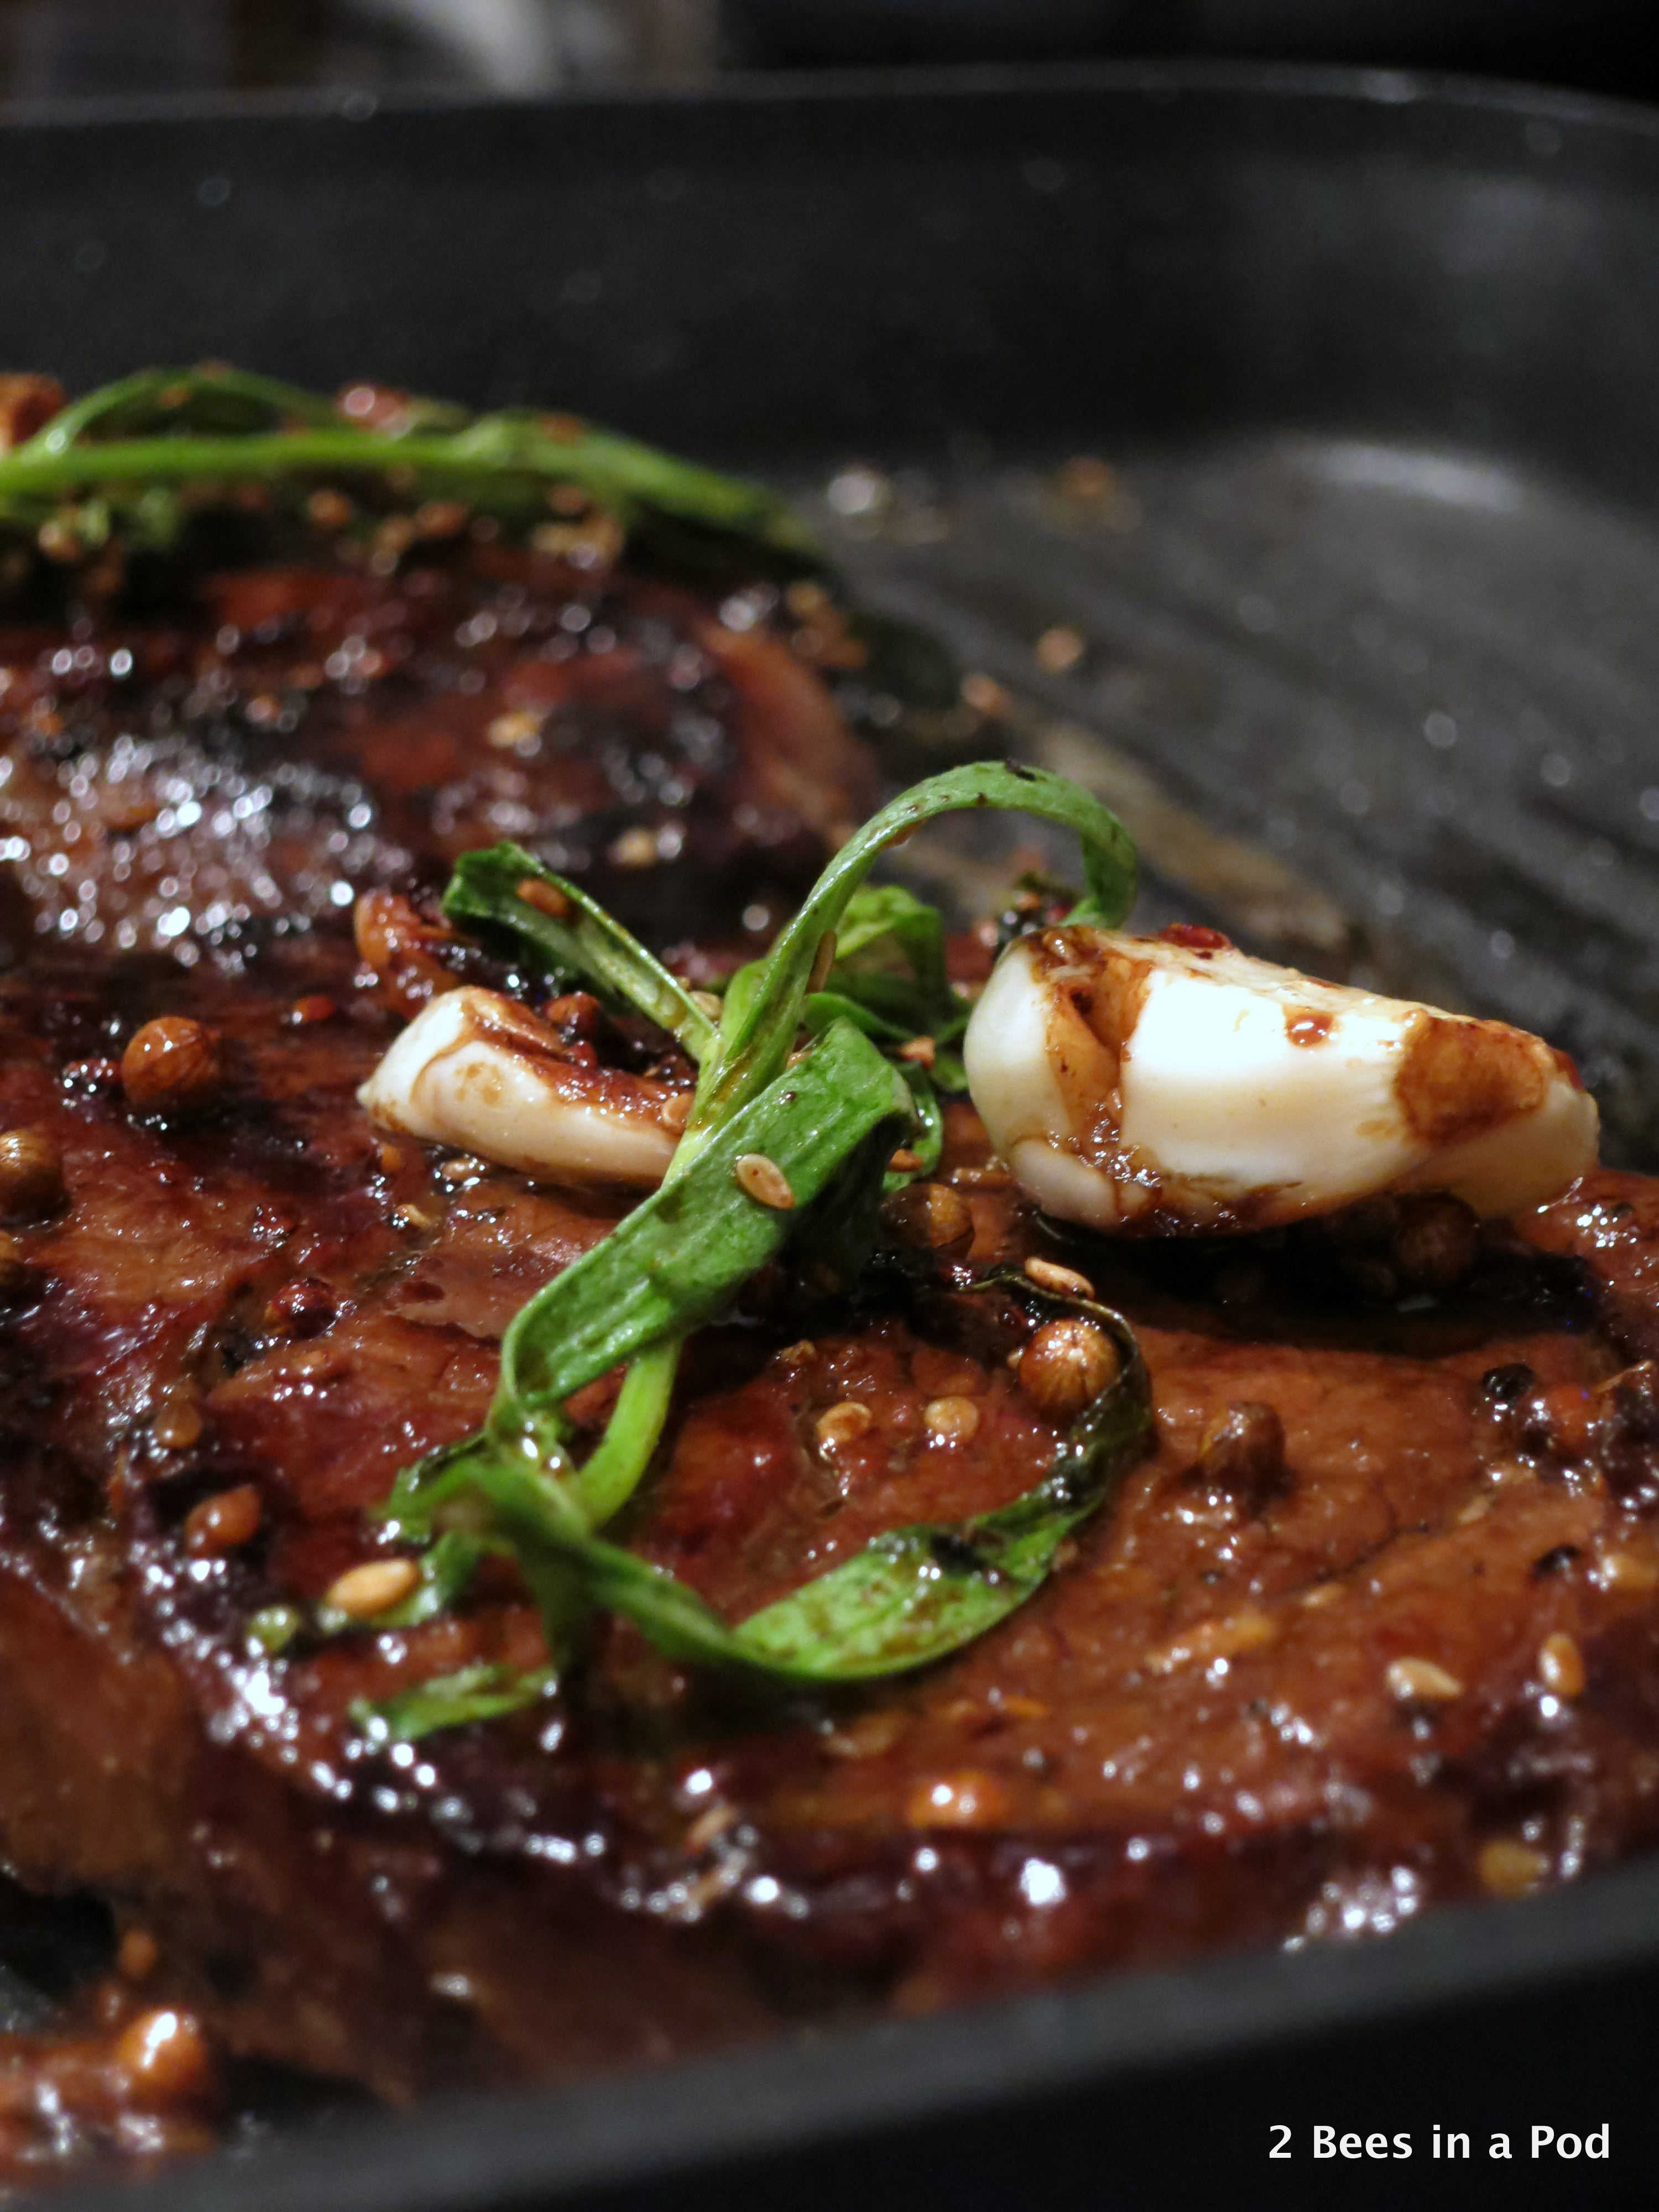 Homemade Steak Marinade